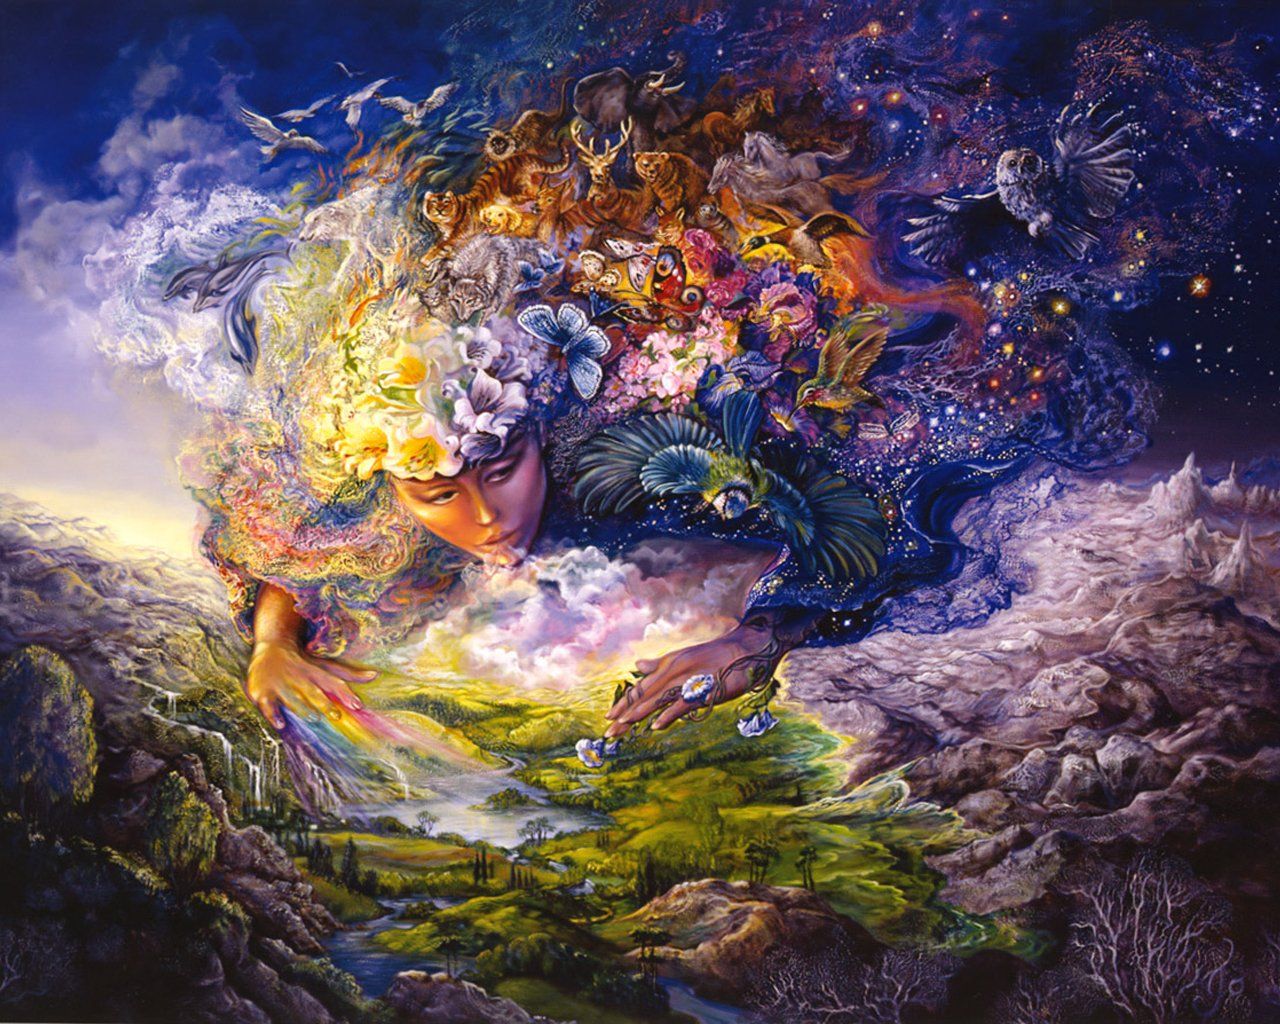 1280x1024 Art Of Imagination Mystical Fantasy Paintings Of Josephine Wall 1280x1024 No 2 Desktop Wallpaper